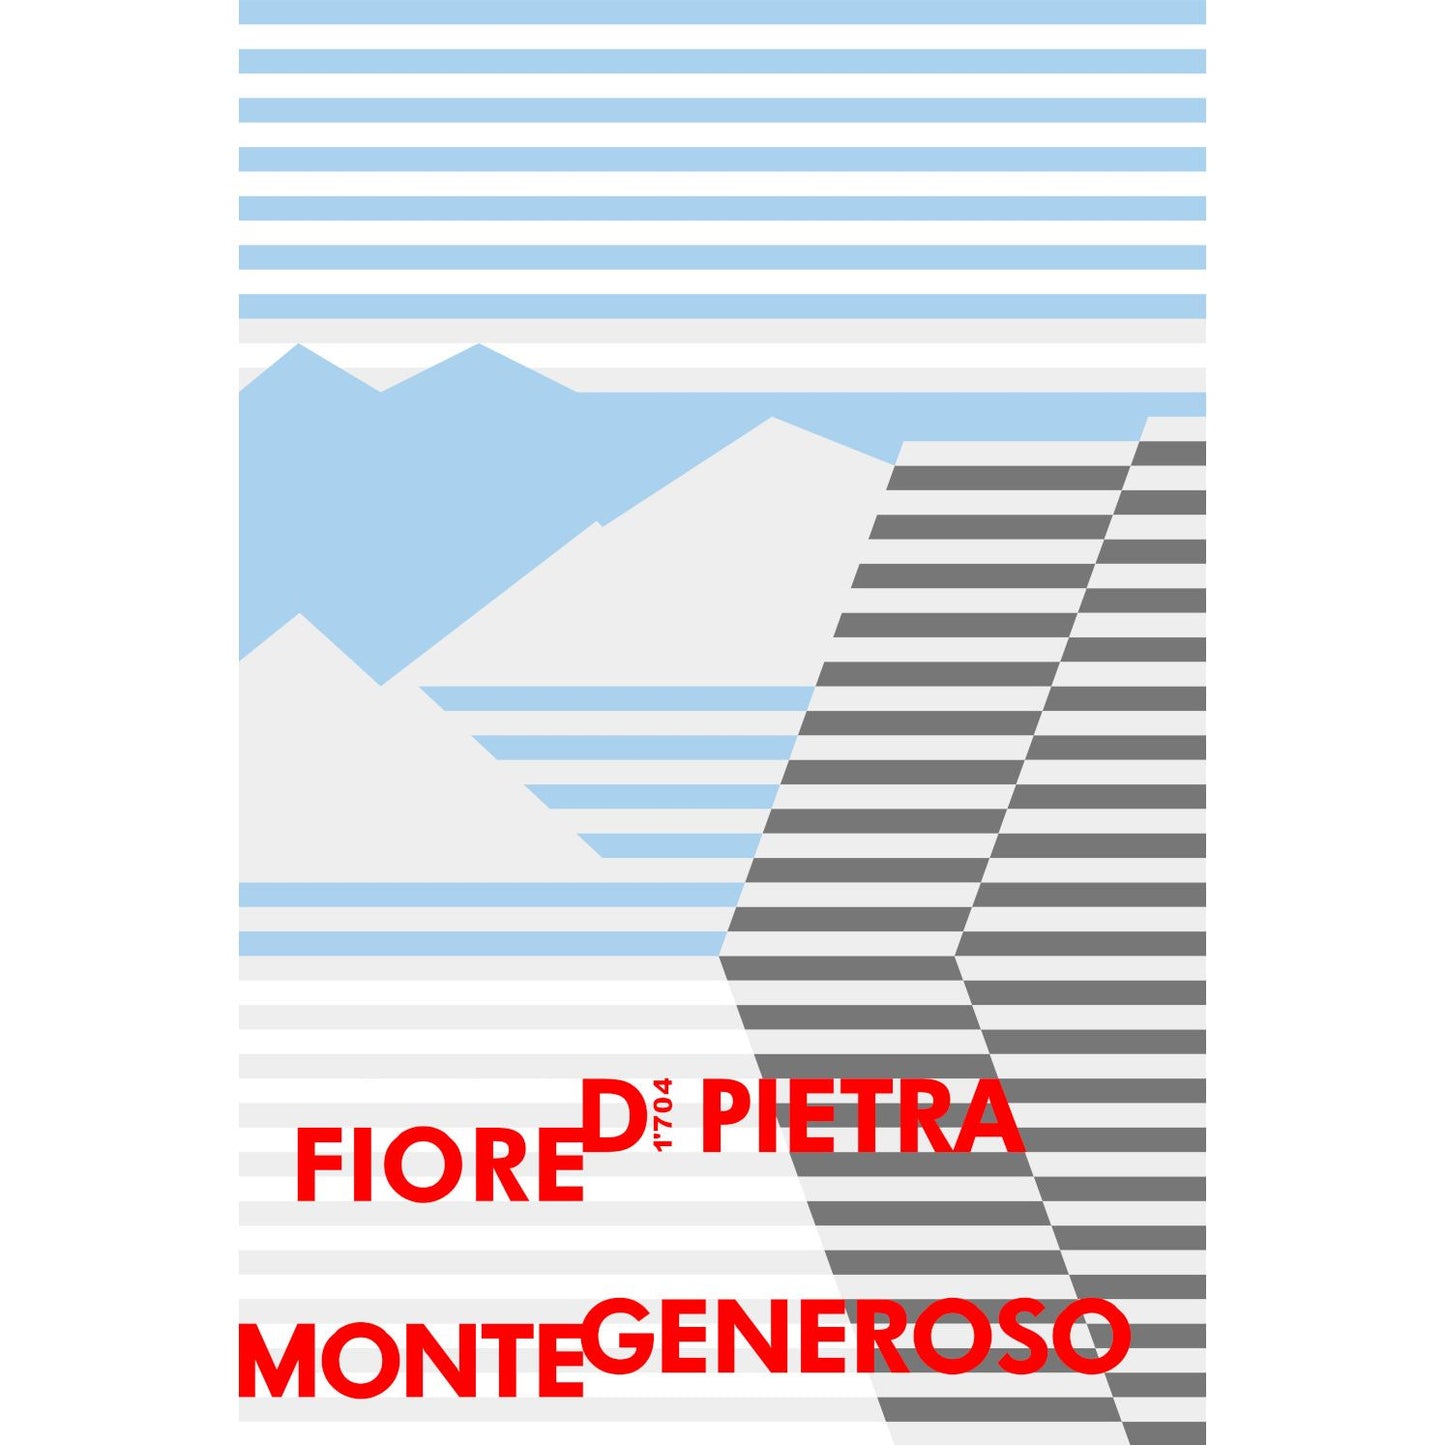 Locandina - Monte Generoso (Castagnetta Botta)